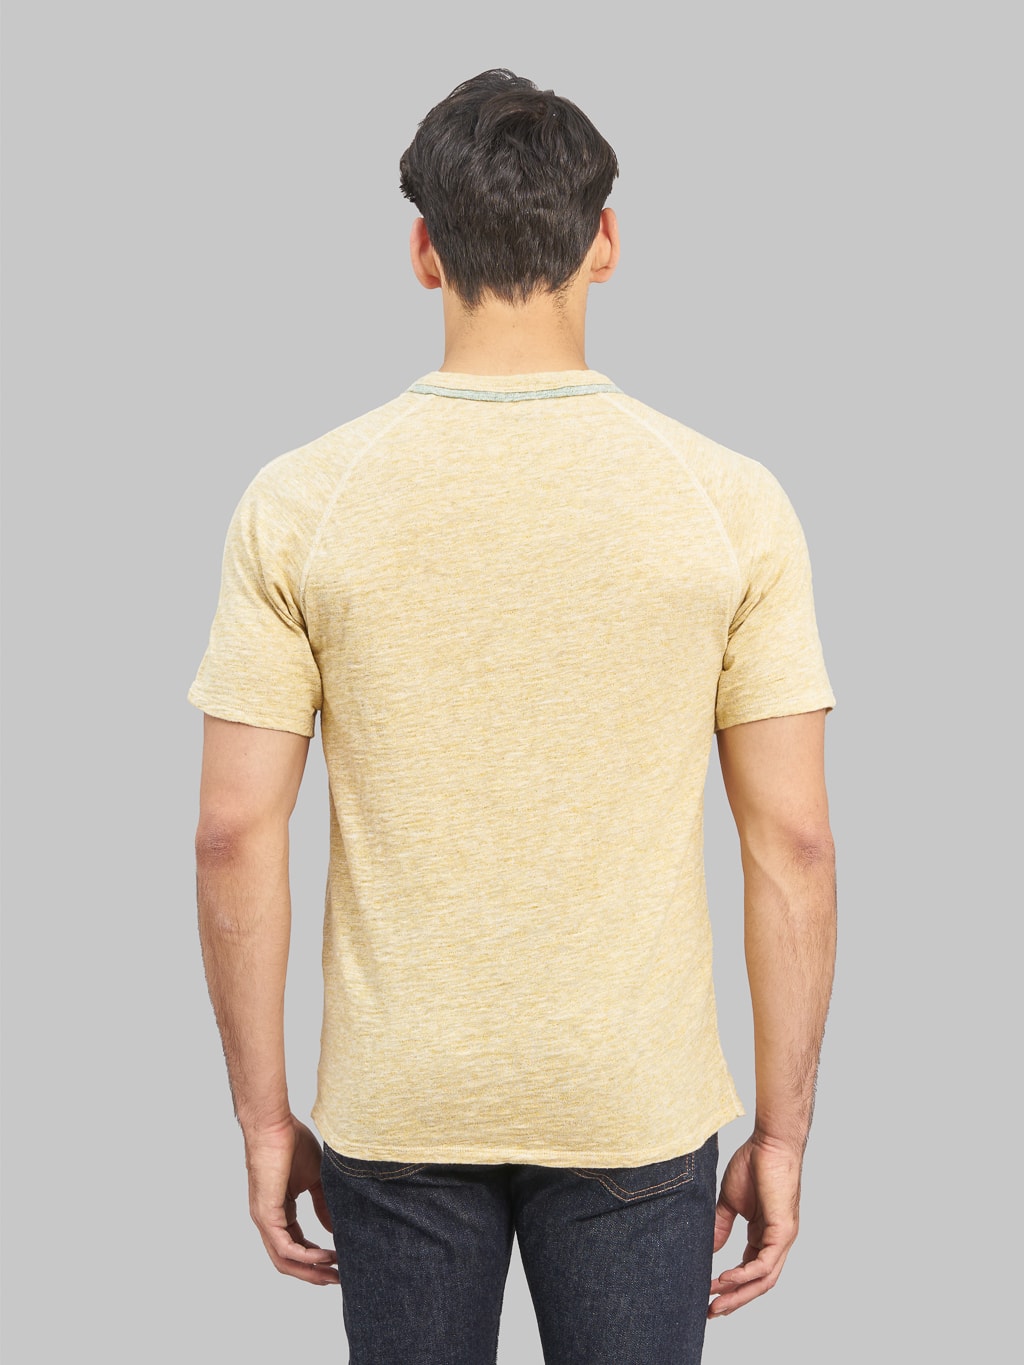 loop and weft double binder neck heather slub knit tshirt mustard back